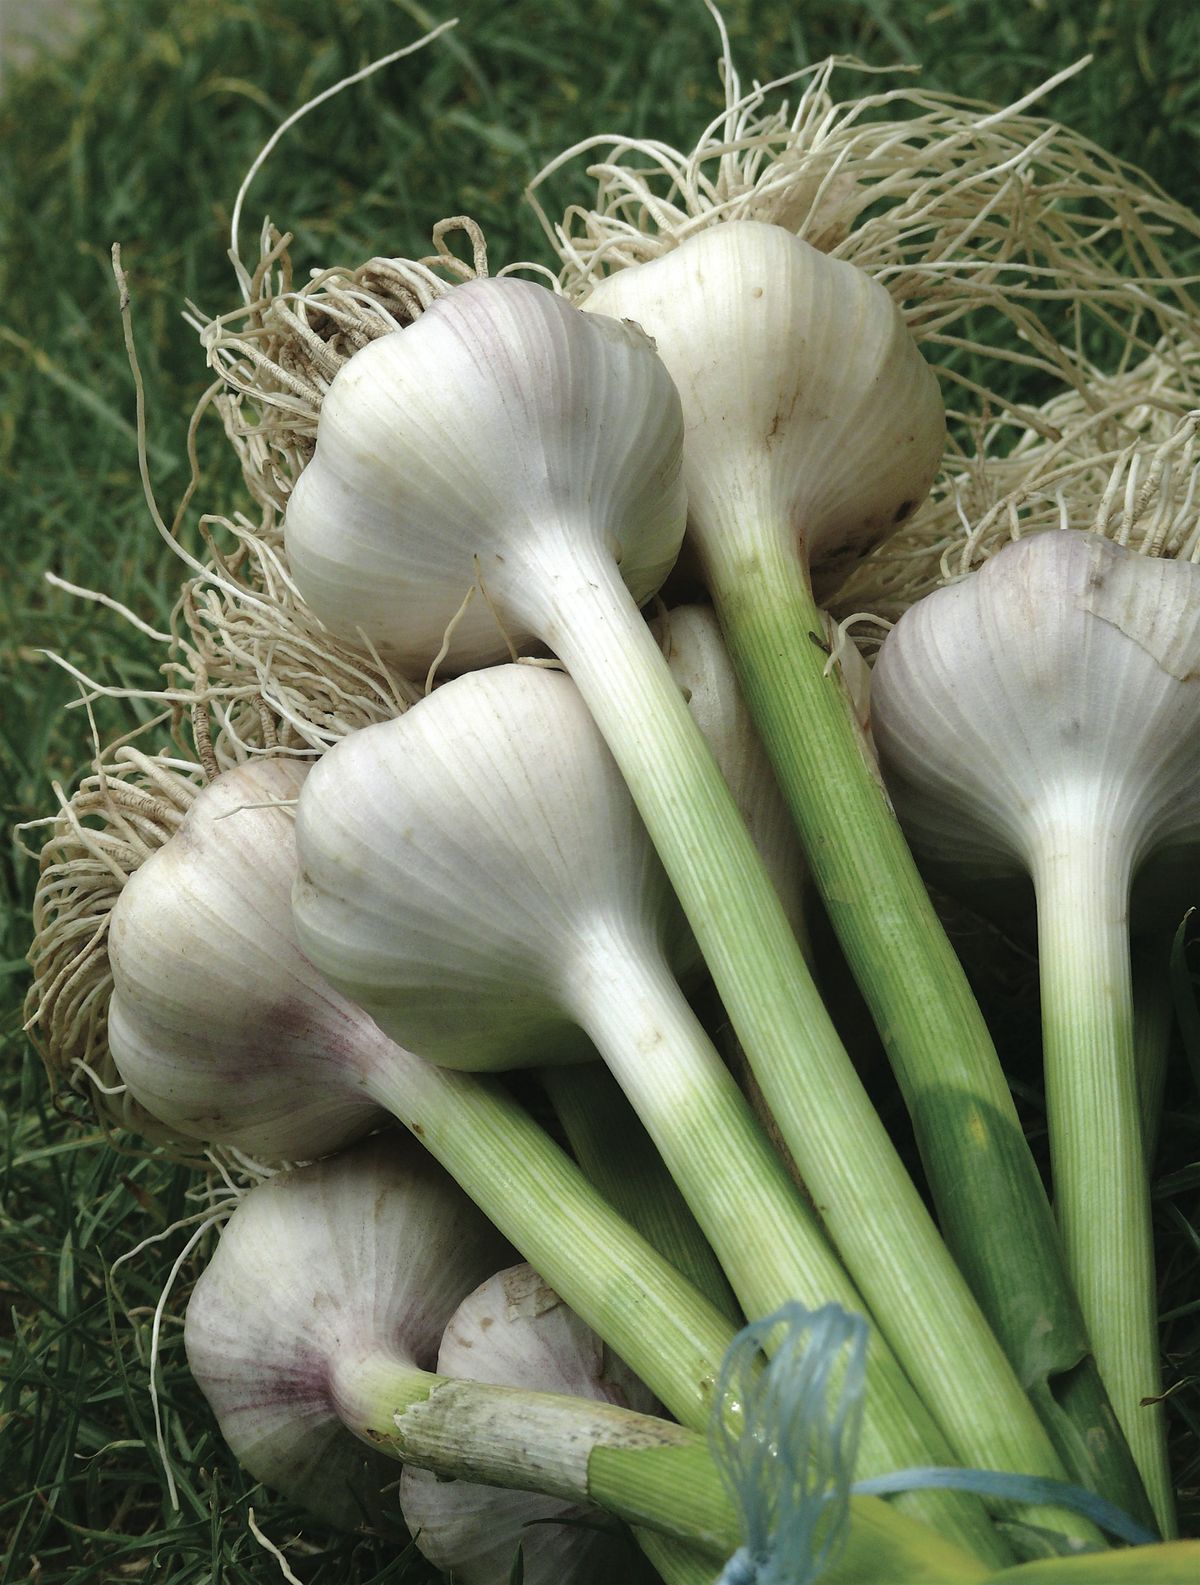 Garlic Growing Workshop